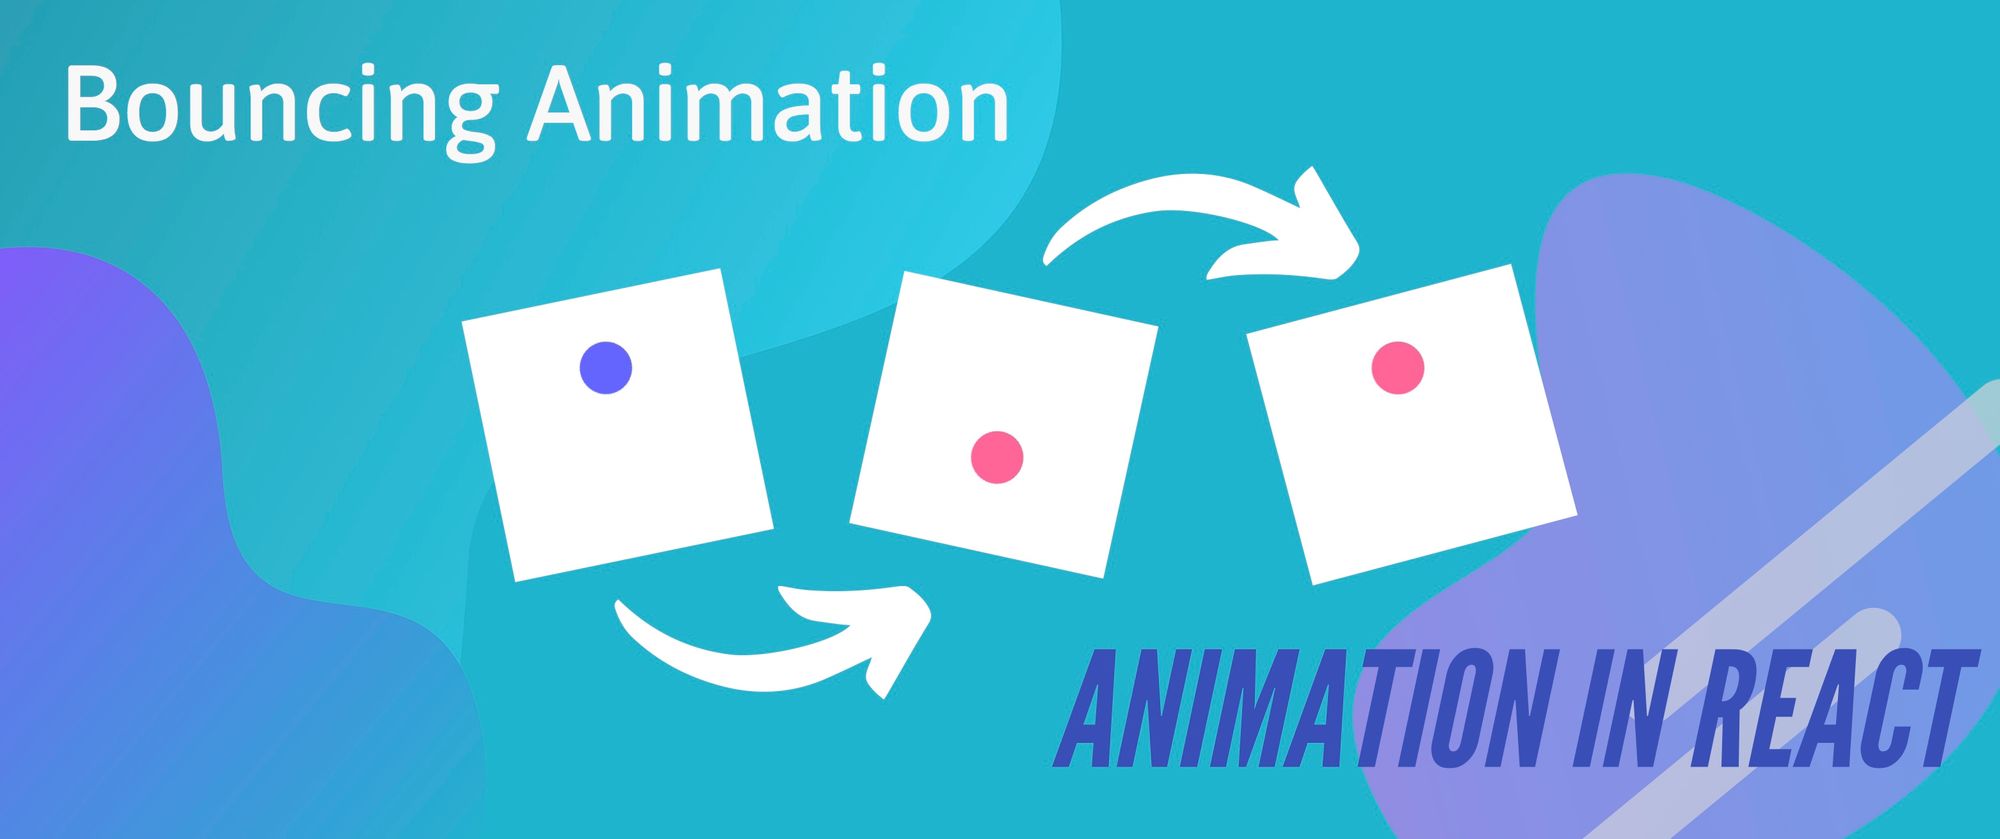 Framer Motion Bouncing Ball Animation | Benevolent Bytes